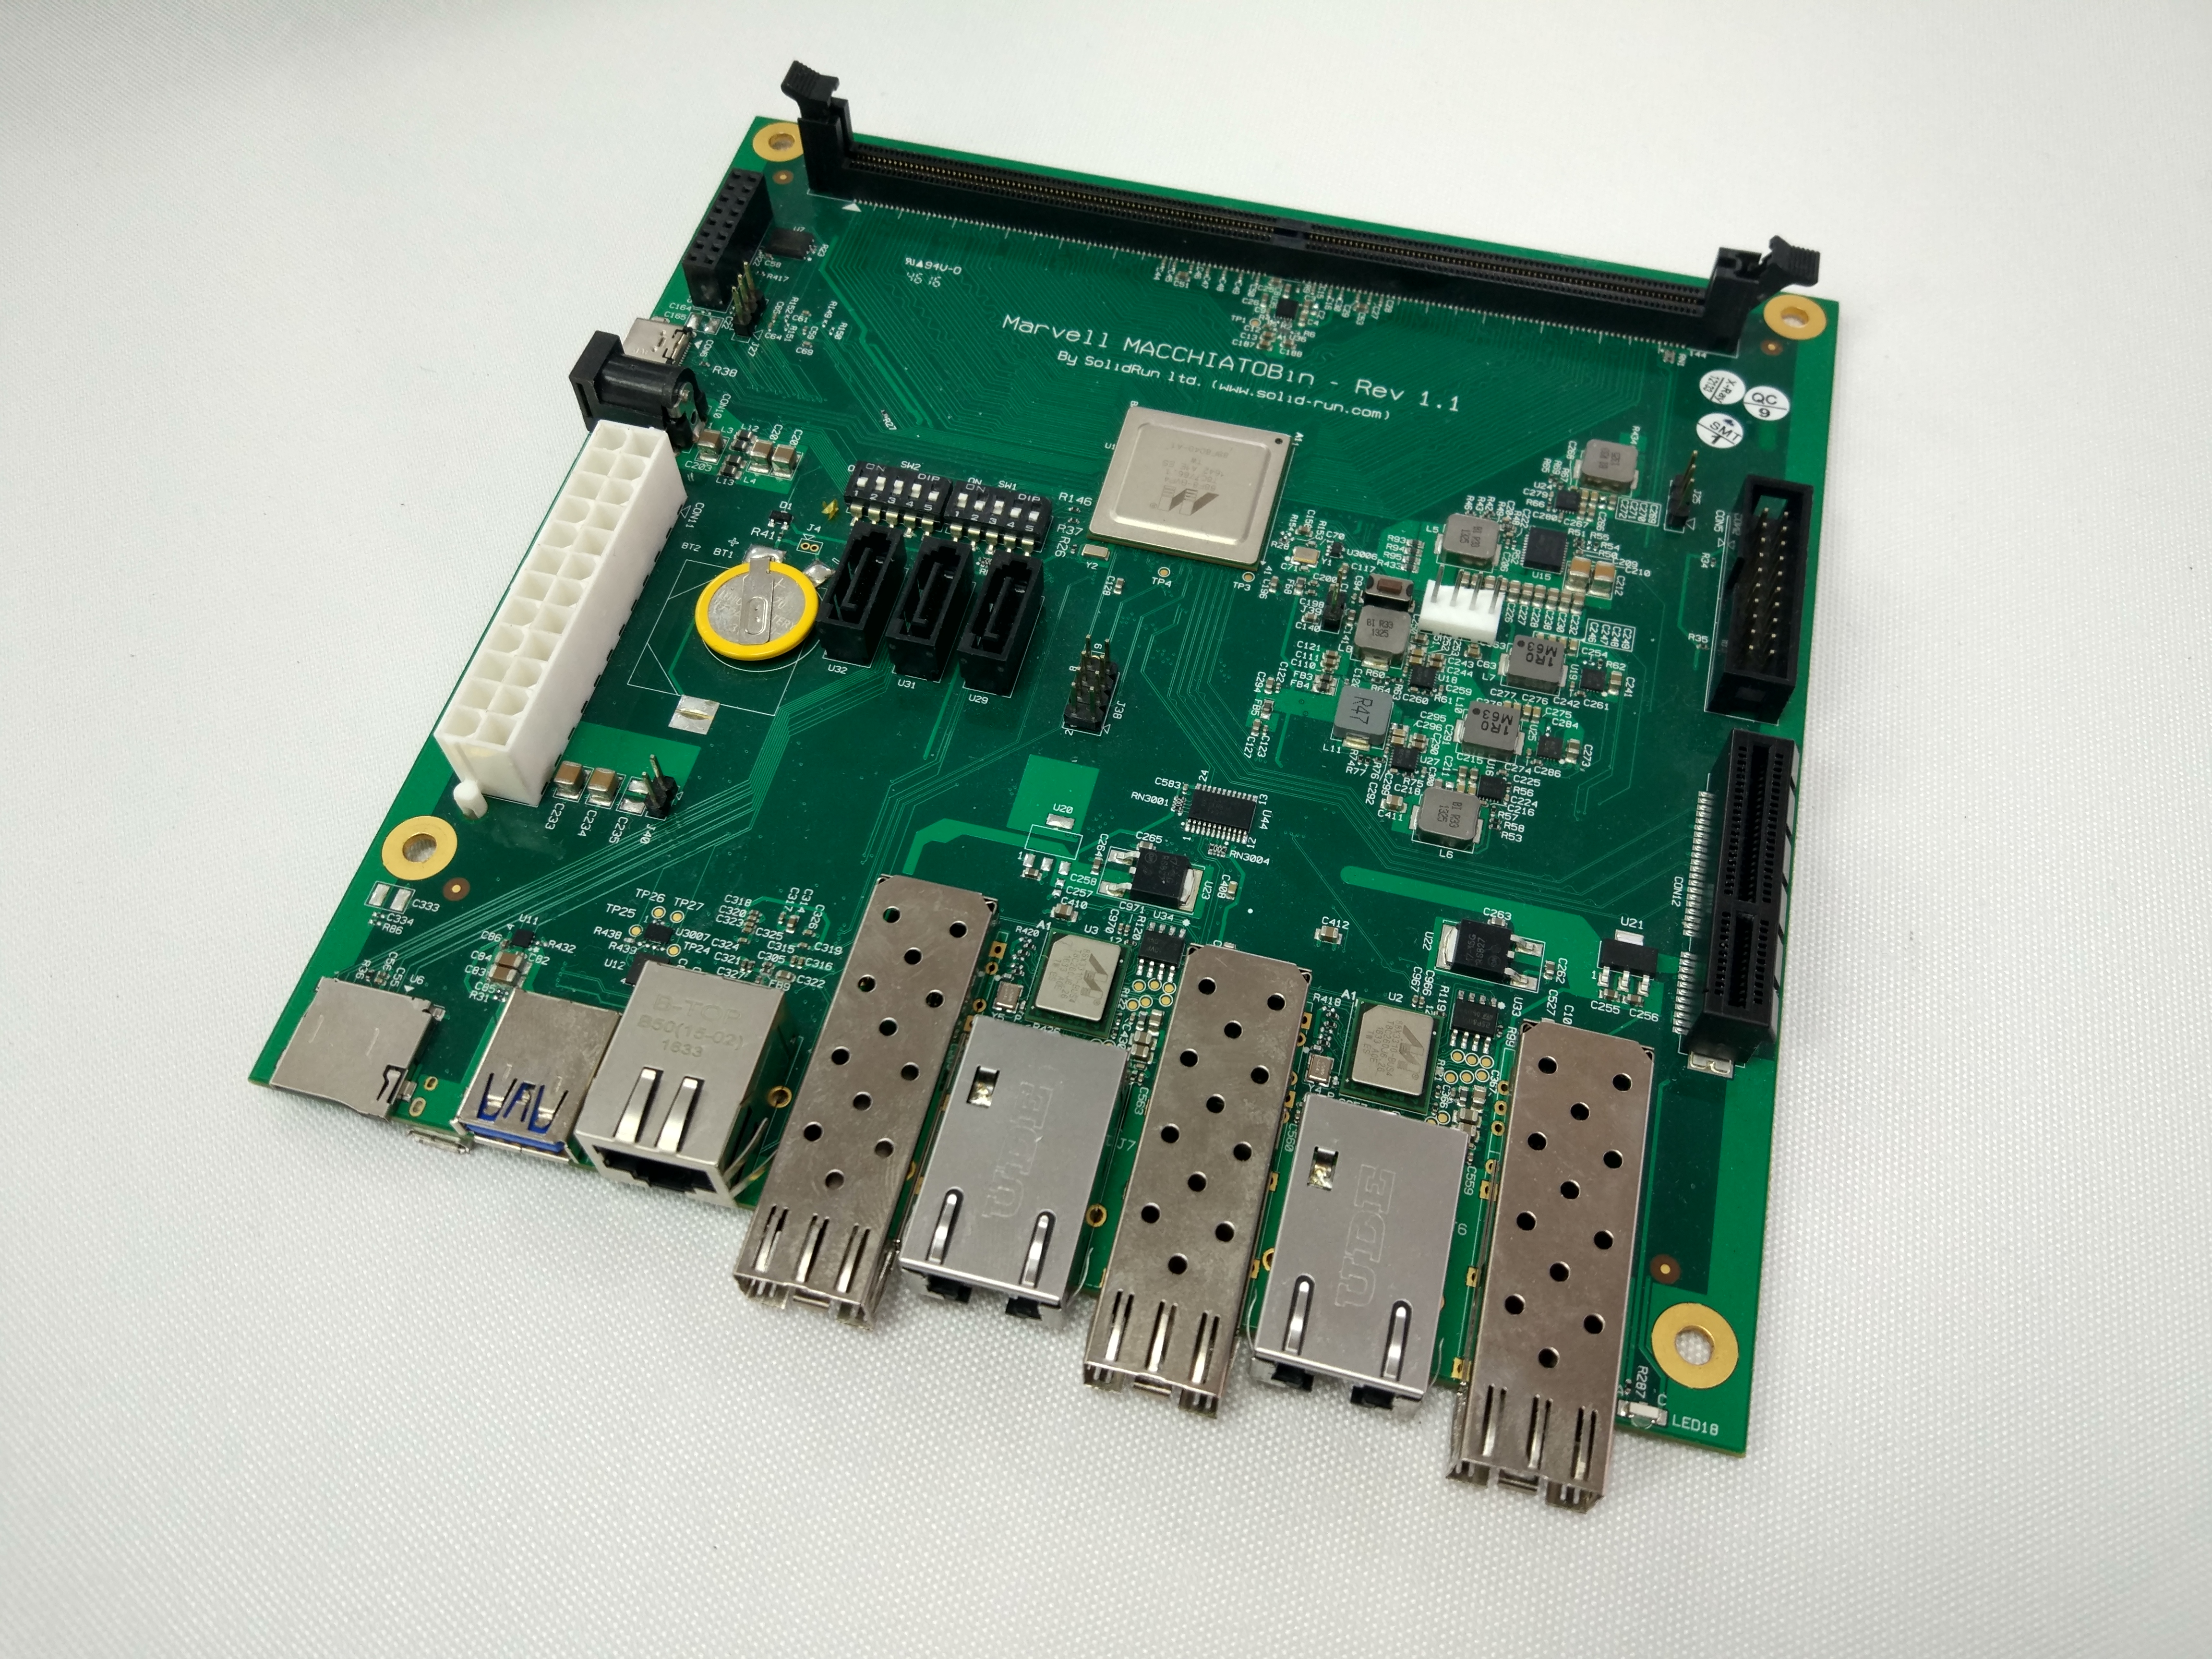 MACCHIATObin network development board Mini-ITX developed by Marvell and SolidRun - with Marvell ARMADA A8040 ARM Cortex A72 processor. Date 7 March 2018